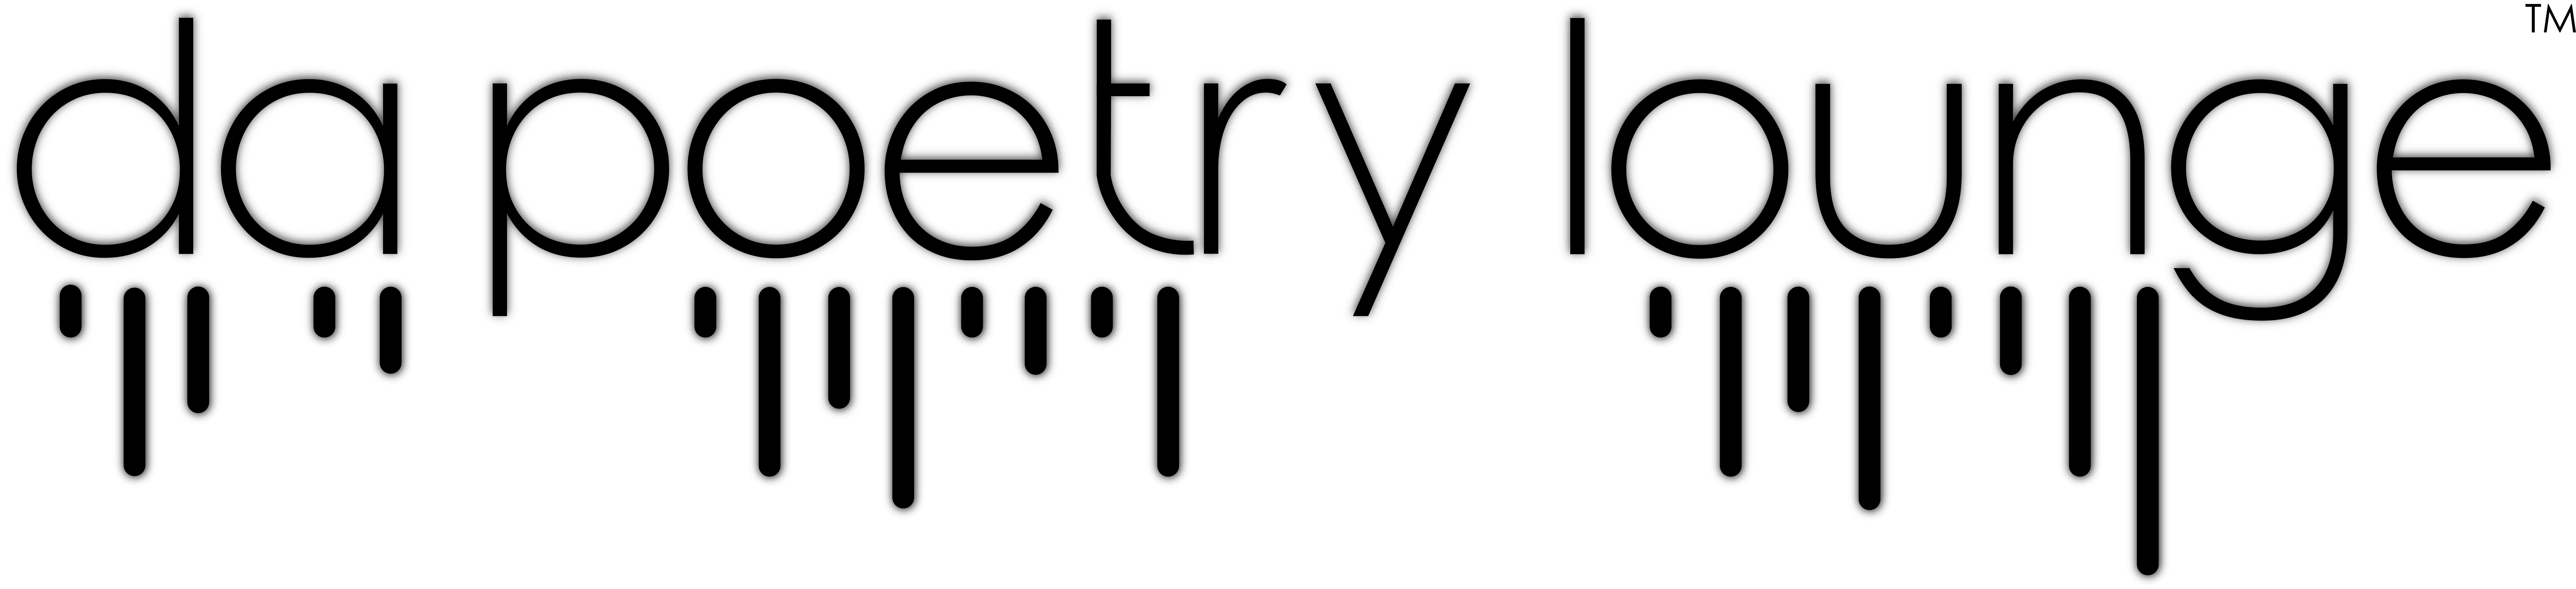 Da Poetry Lounge Logo TM